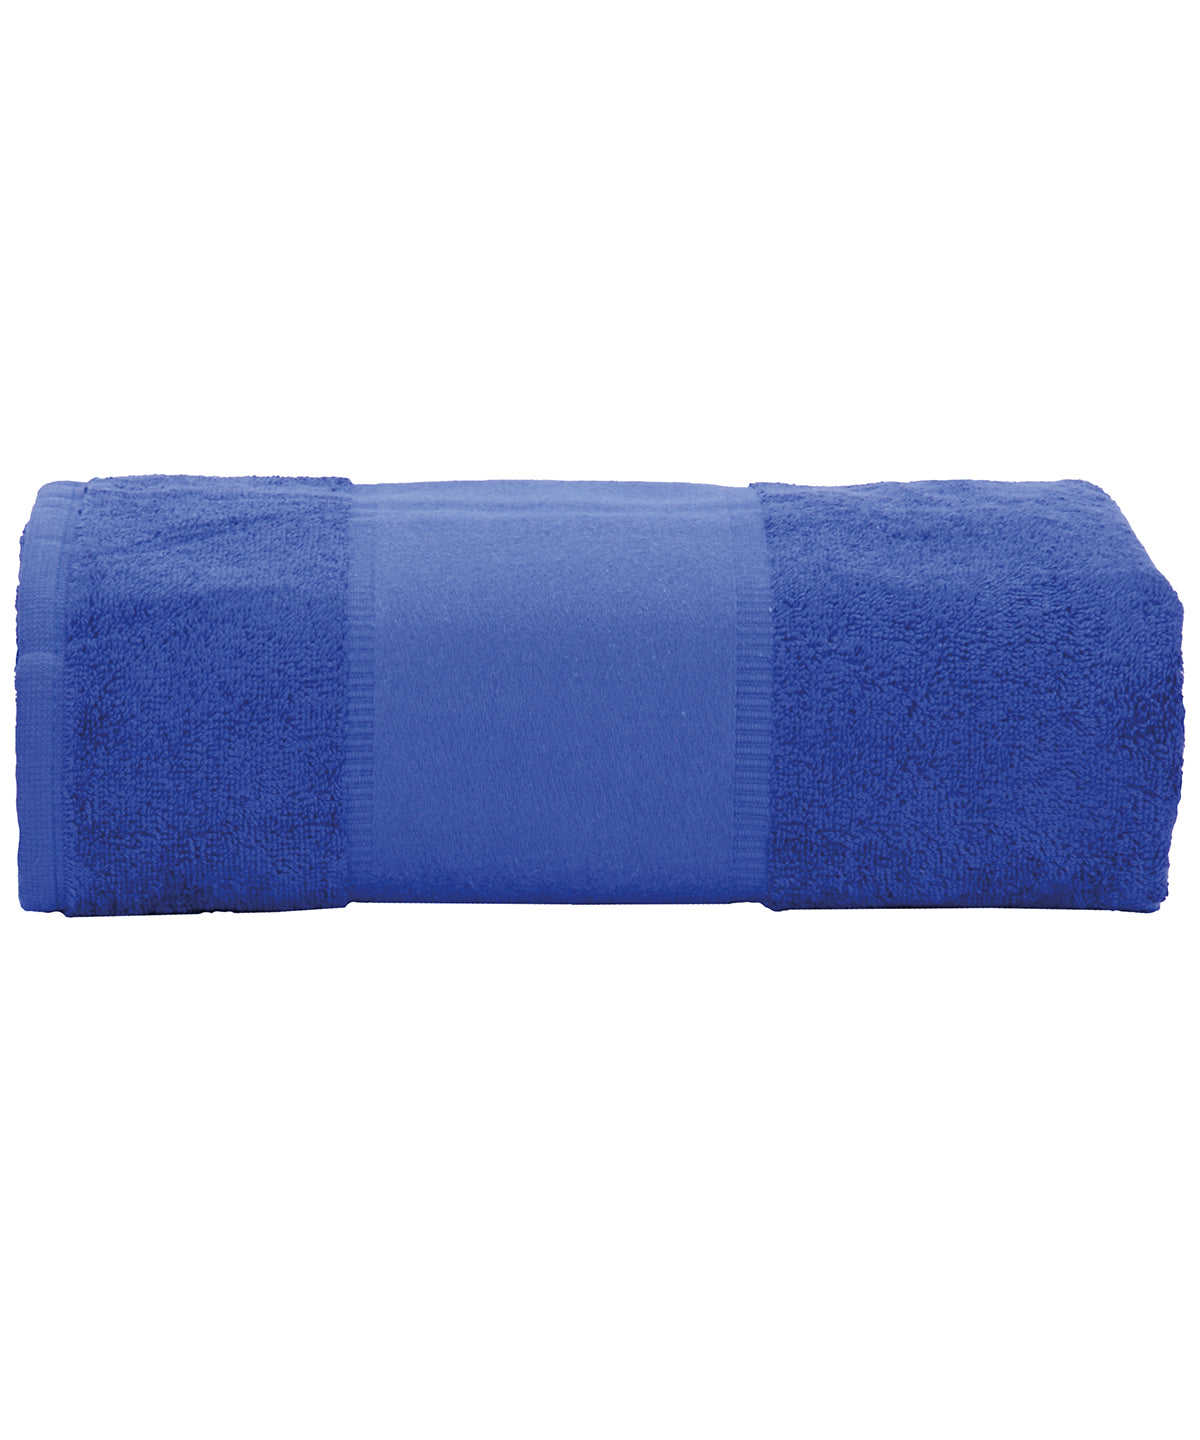 Personalised Towels - Mid Blue A&R Towels ARTG® PRINT-Me® big towel